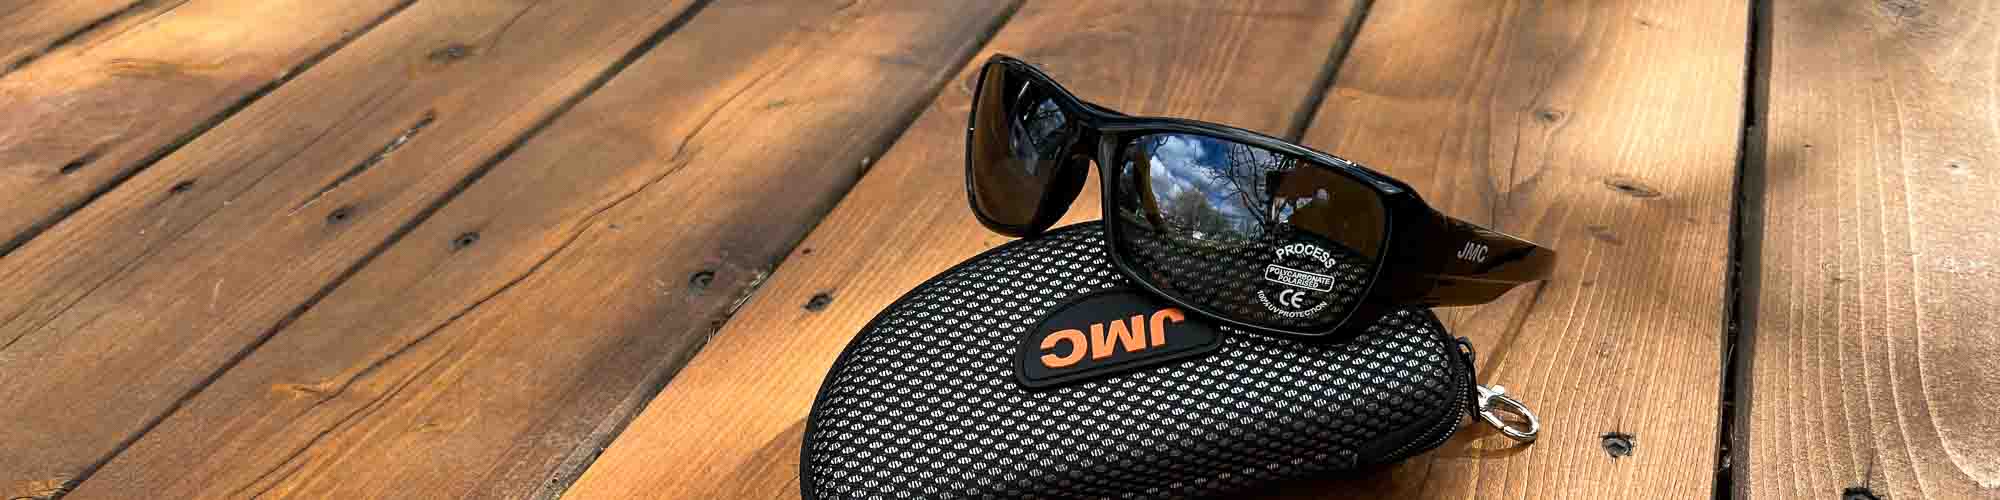 JMC Zoom Cristamax Photochromic Fishing Sunglasses - how to choose fishing sunglasses